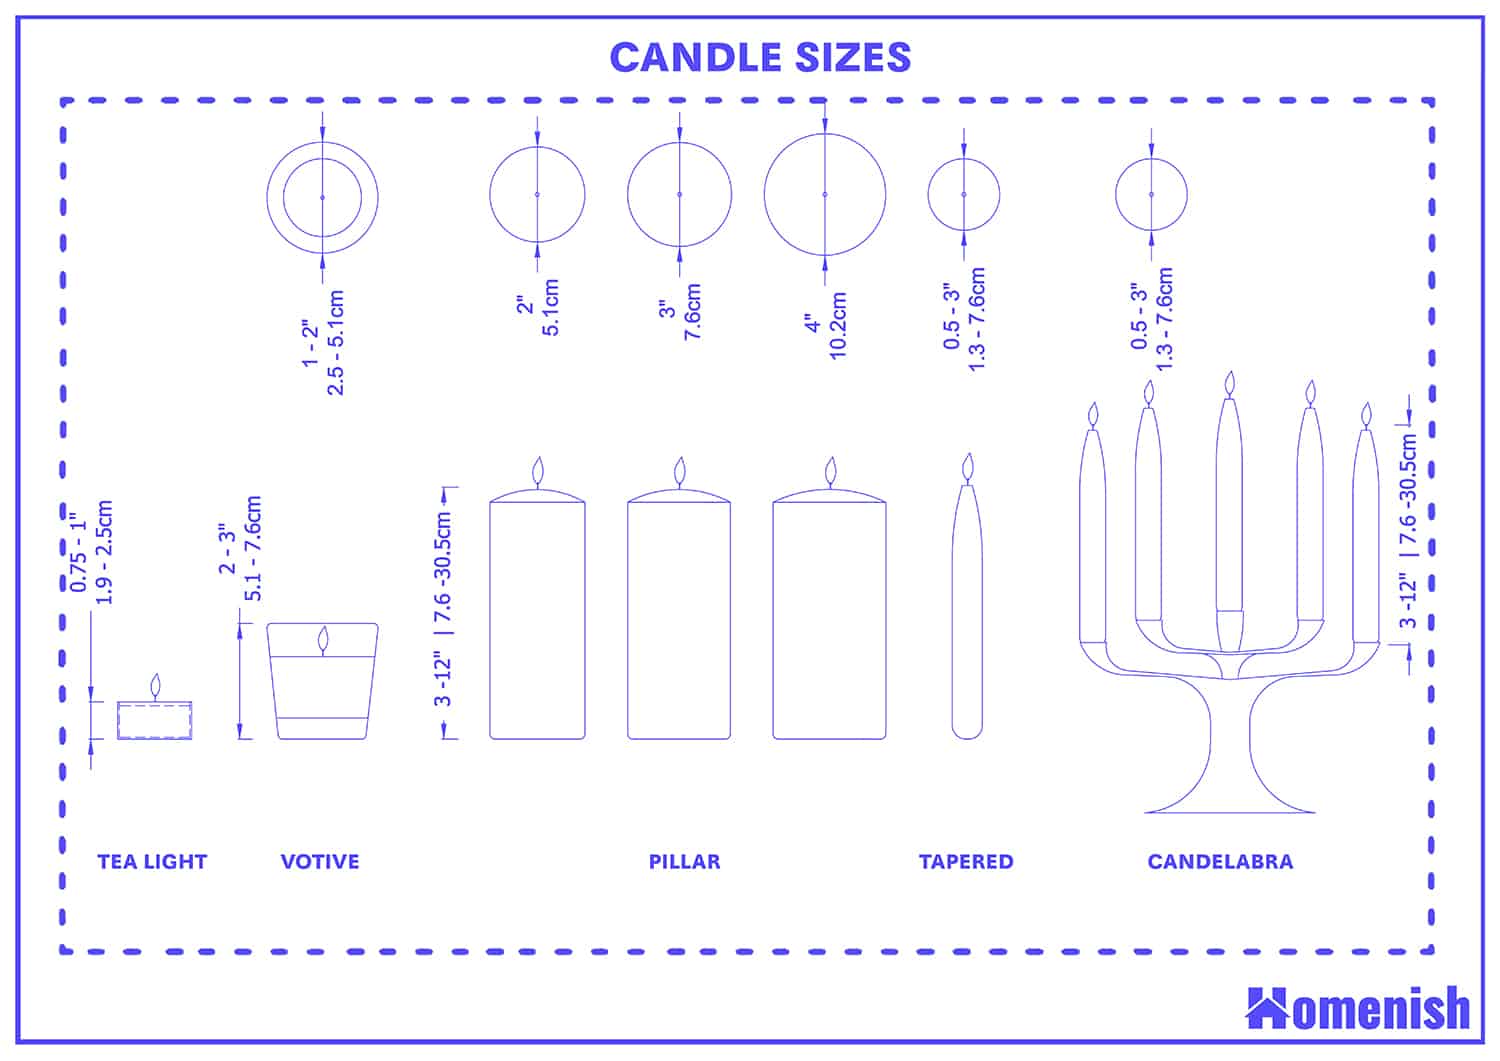 Candle sizes